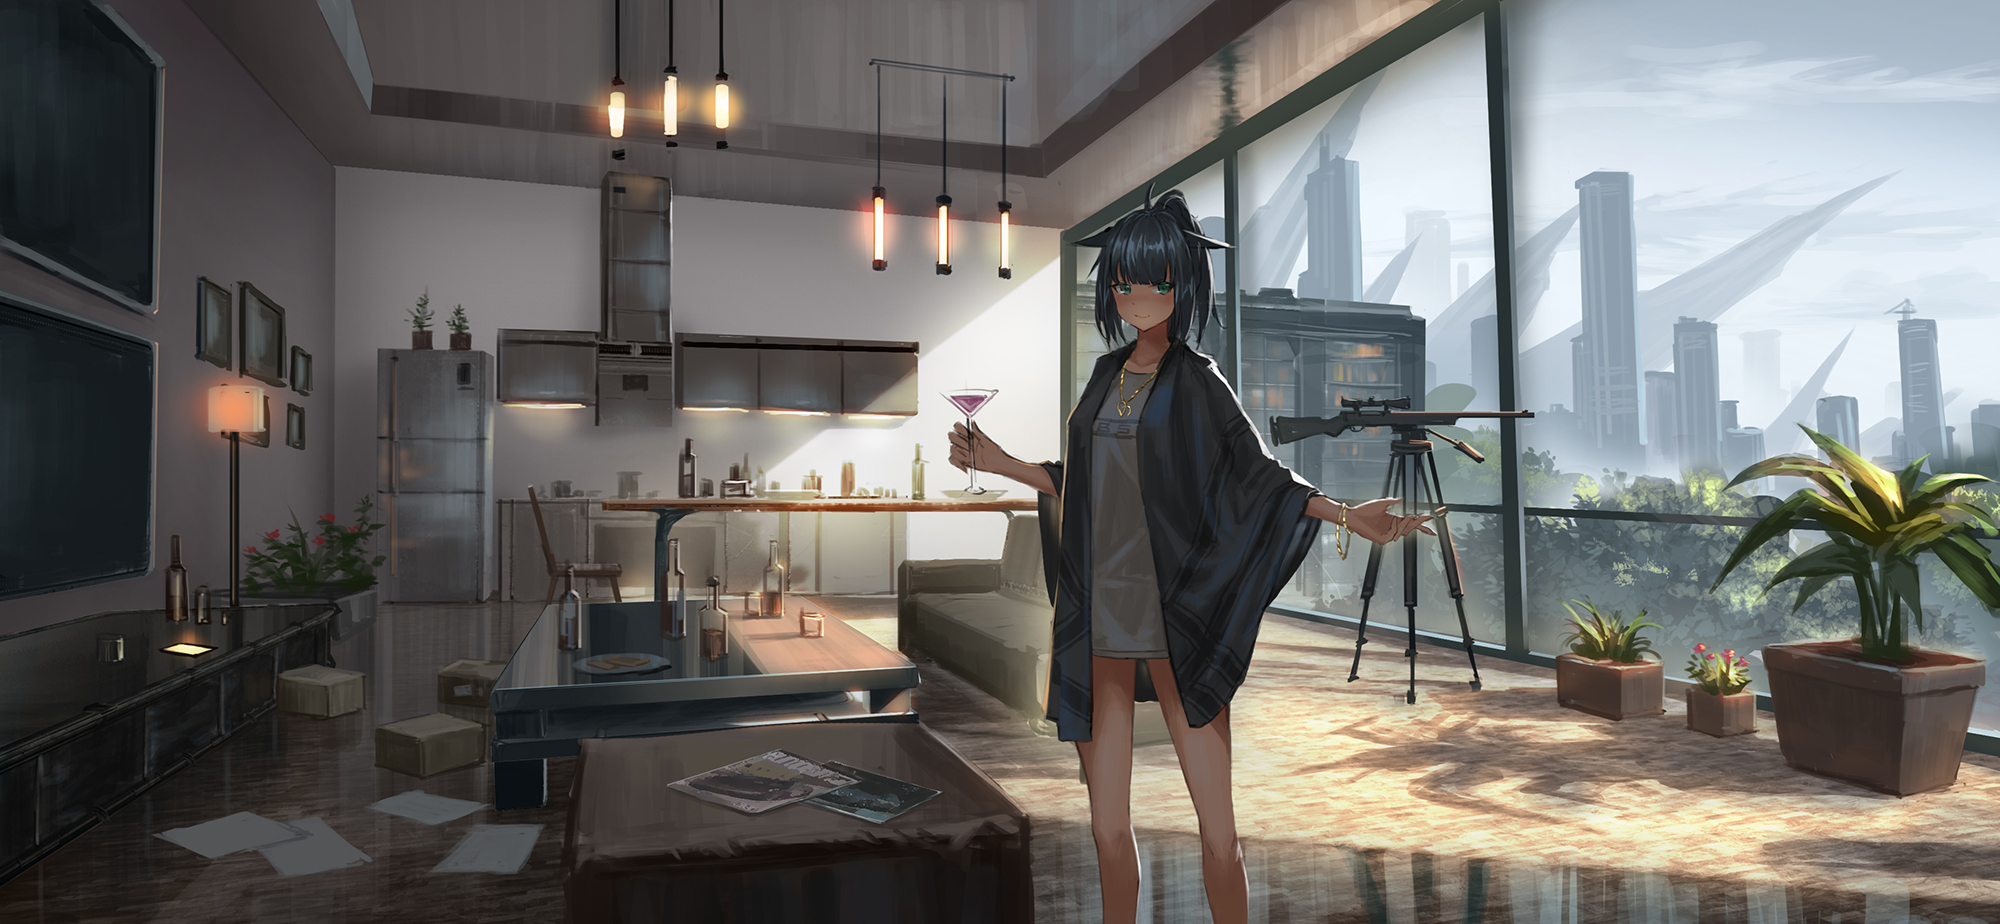 Digital Art Artwork Anime Anime Girls Portrait Short Hair Arknights Room Weapon City Plants Kitchen  2000x924